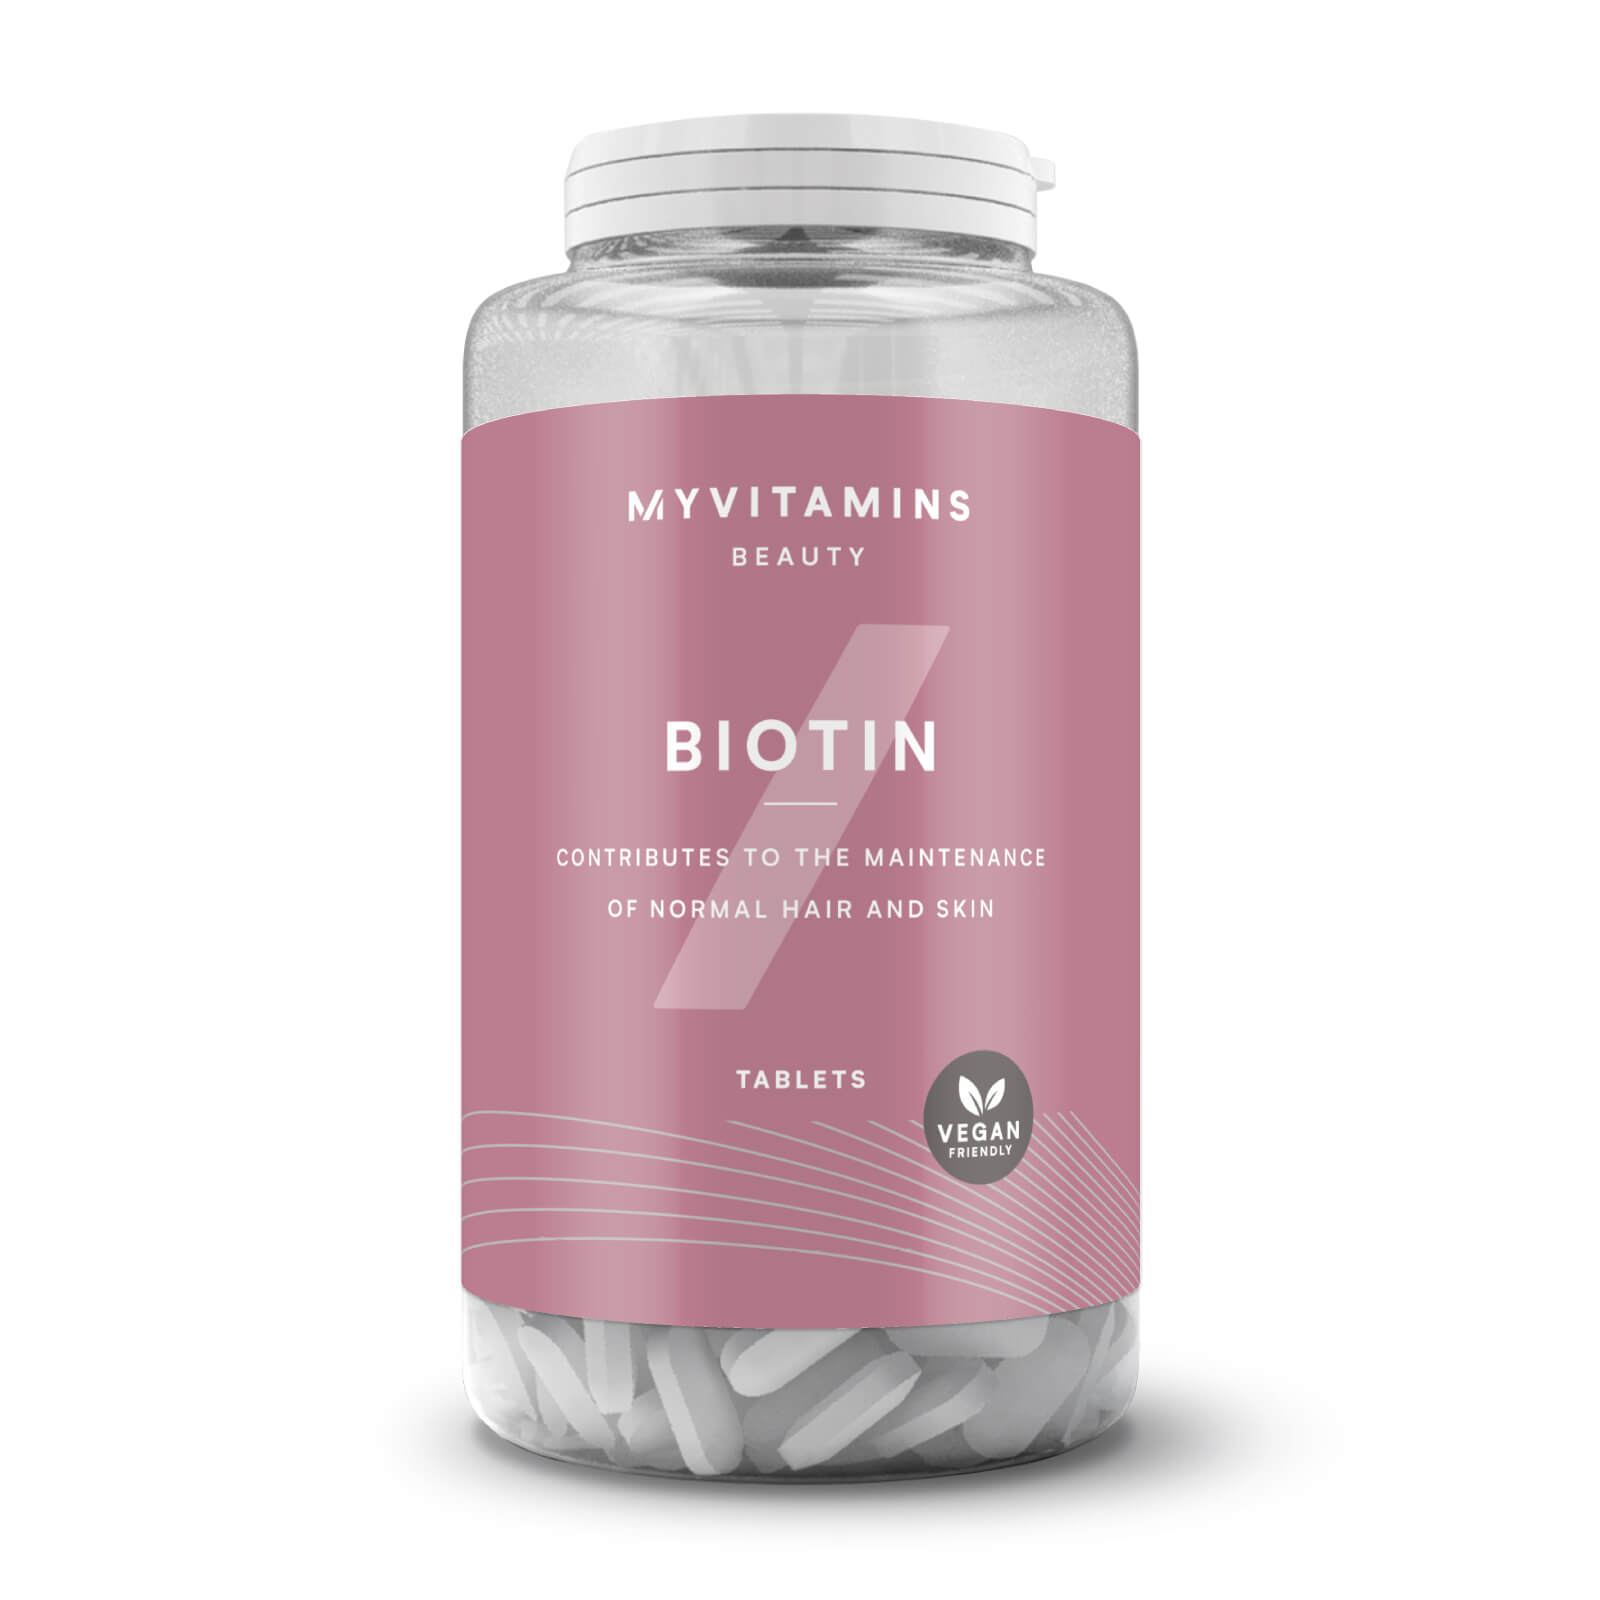 Myvitamins Biotin - 90Tablets